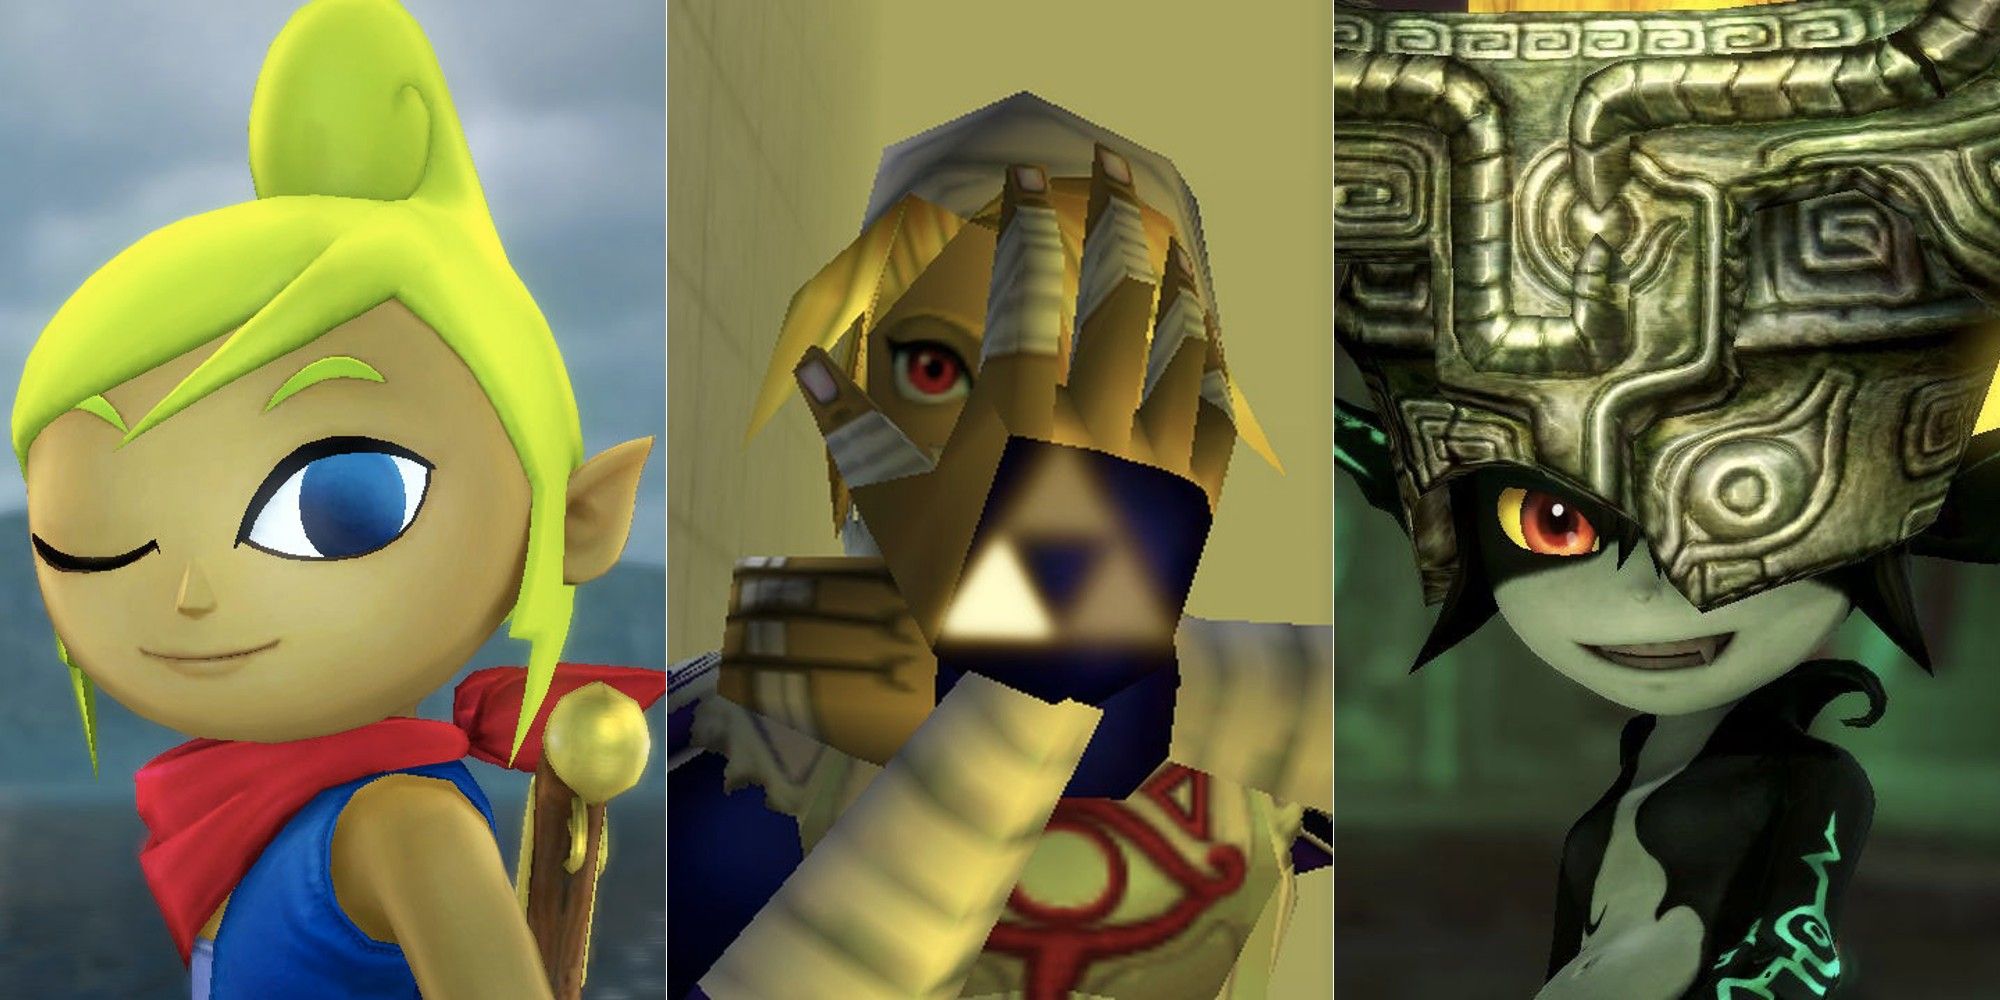 De gauche à droite, Tetra, Sheik et Midna de Legend of Zelda.